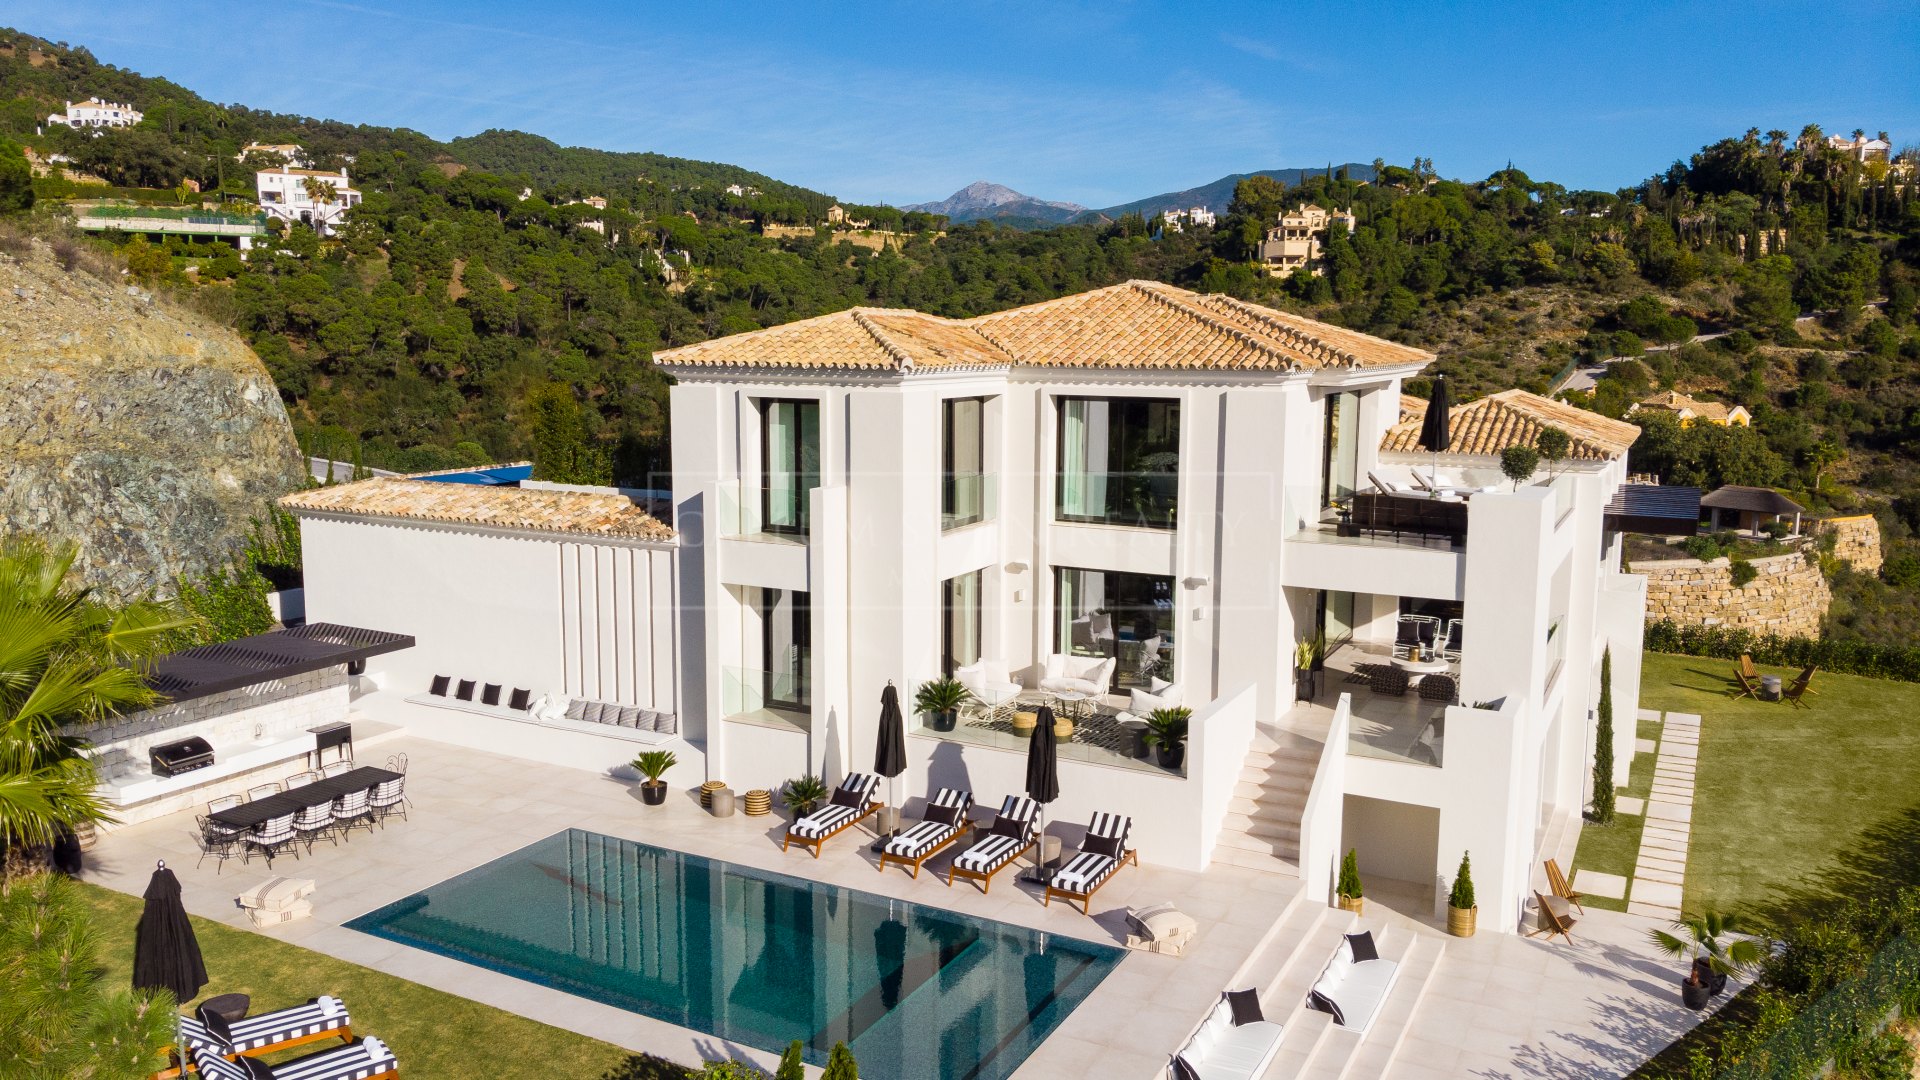 Stunning luxury villa in El Madroñal with panoramic views